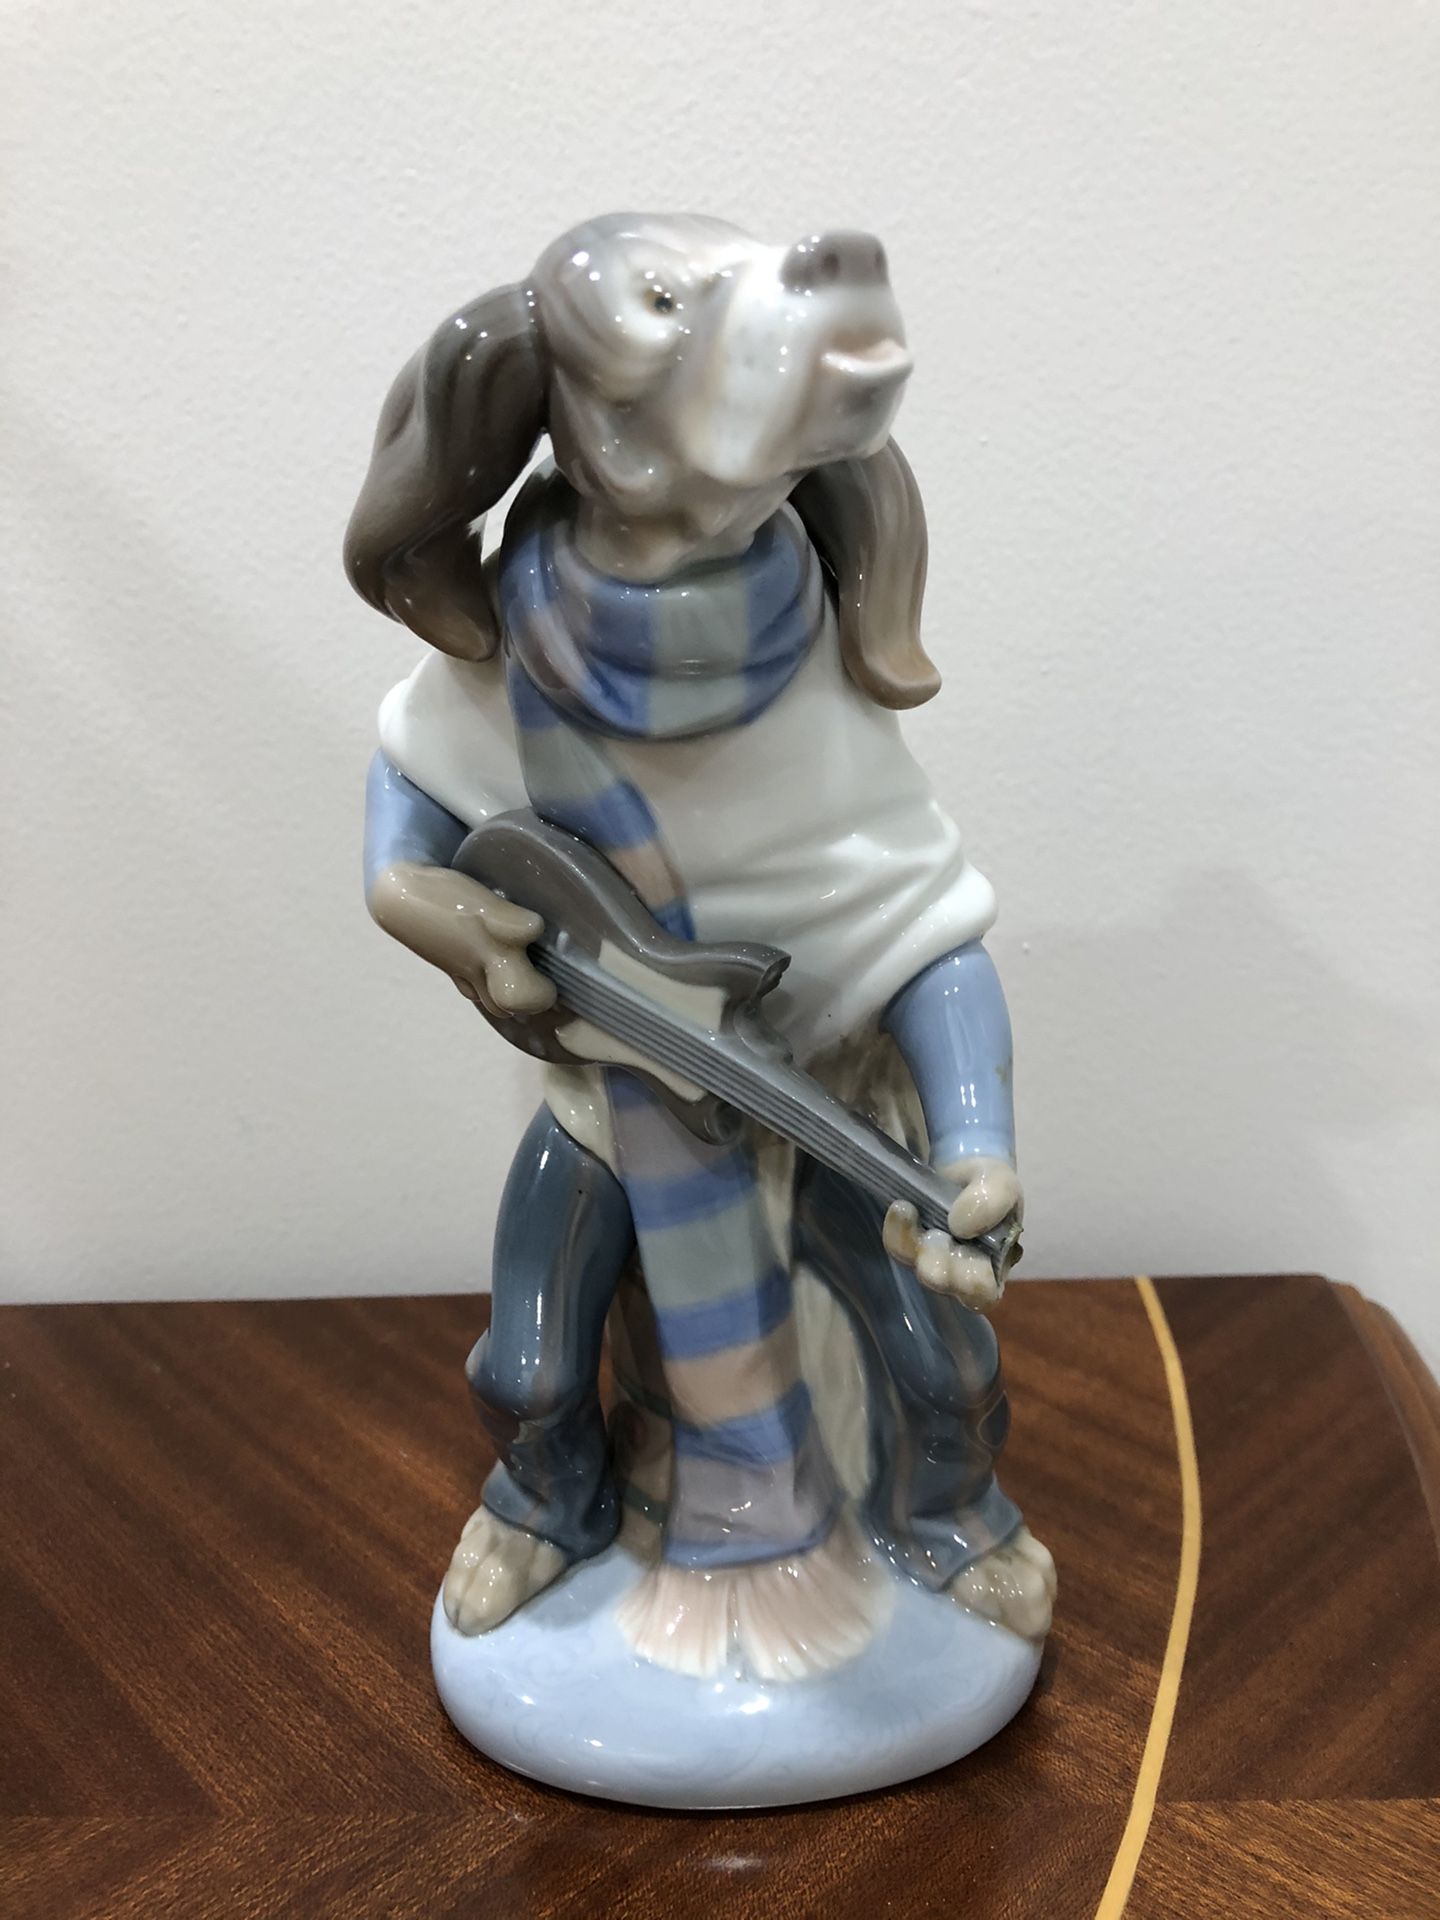 Lladro porcelain guitarist dog figurine, about 8” high